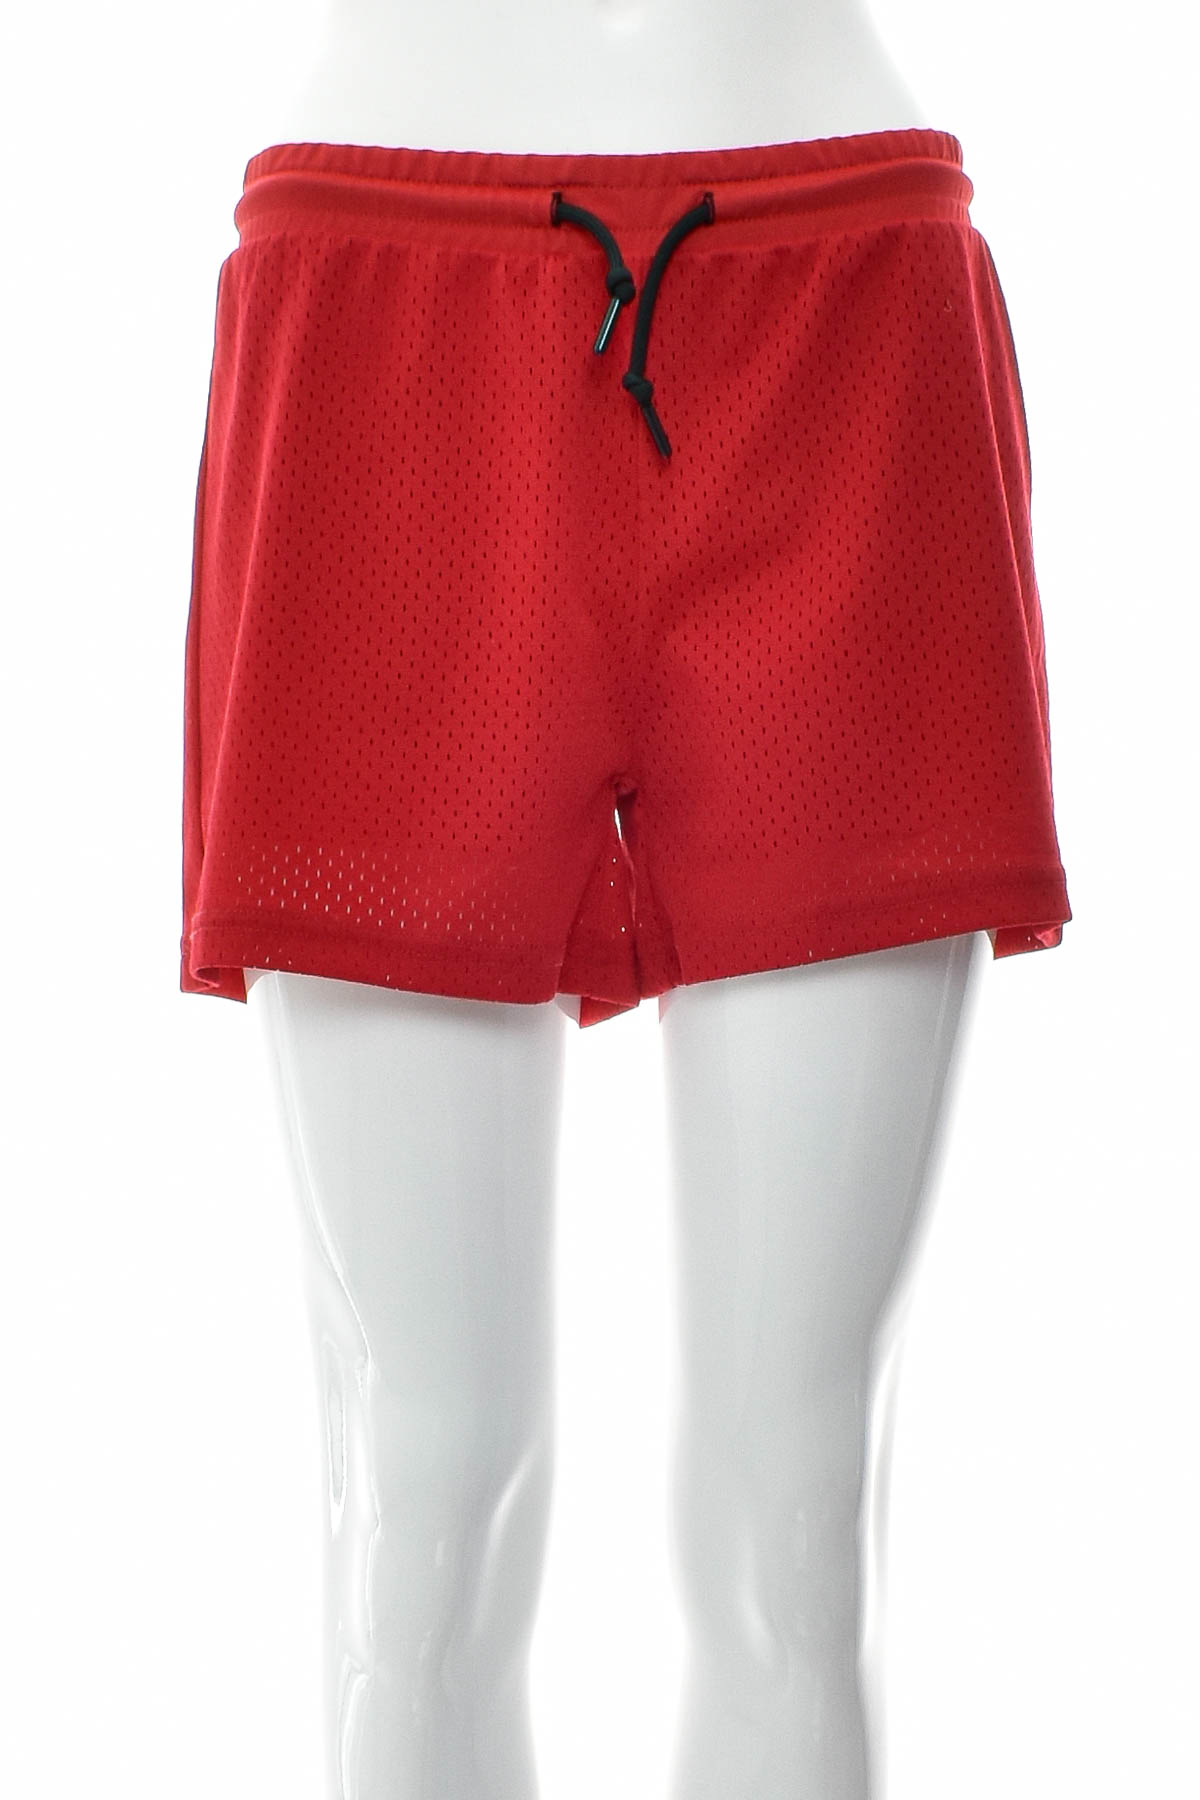 Women's shorts - Crane - 0